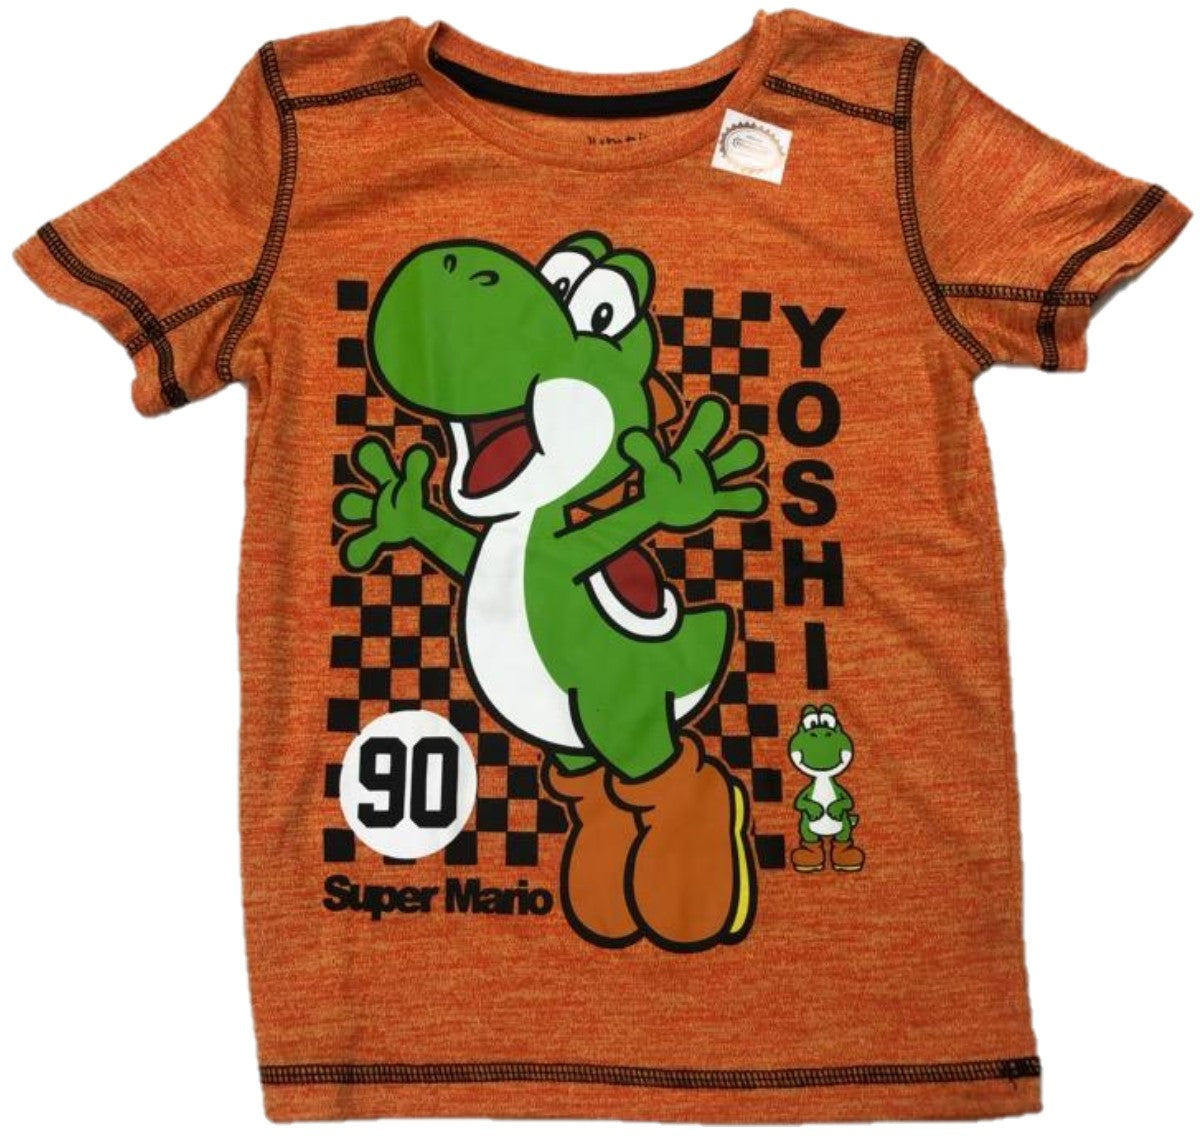 Yoshi 1990 Super Mario Boys T-Shirt (Orange)